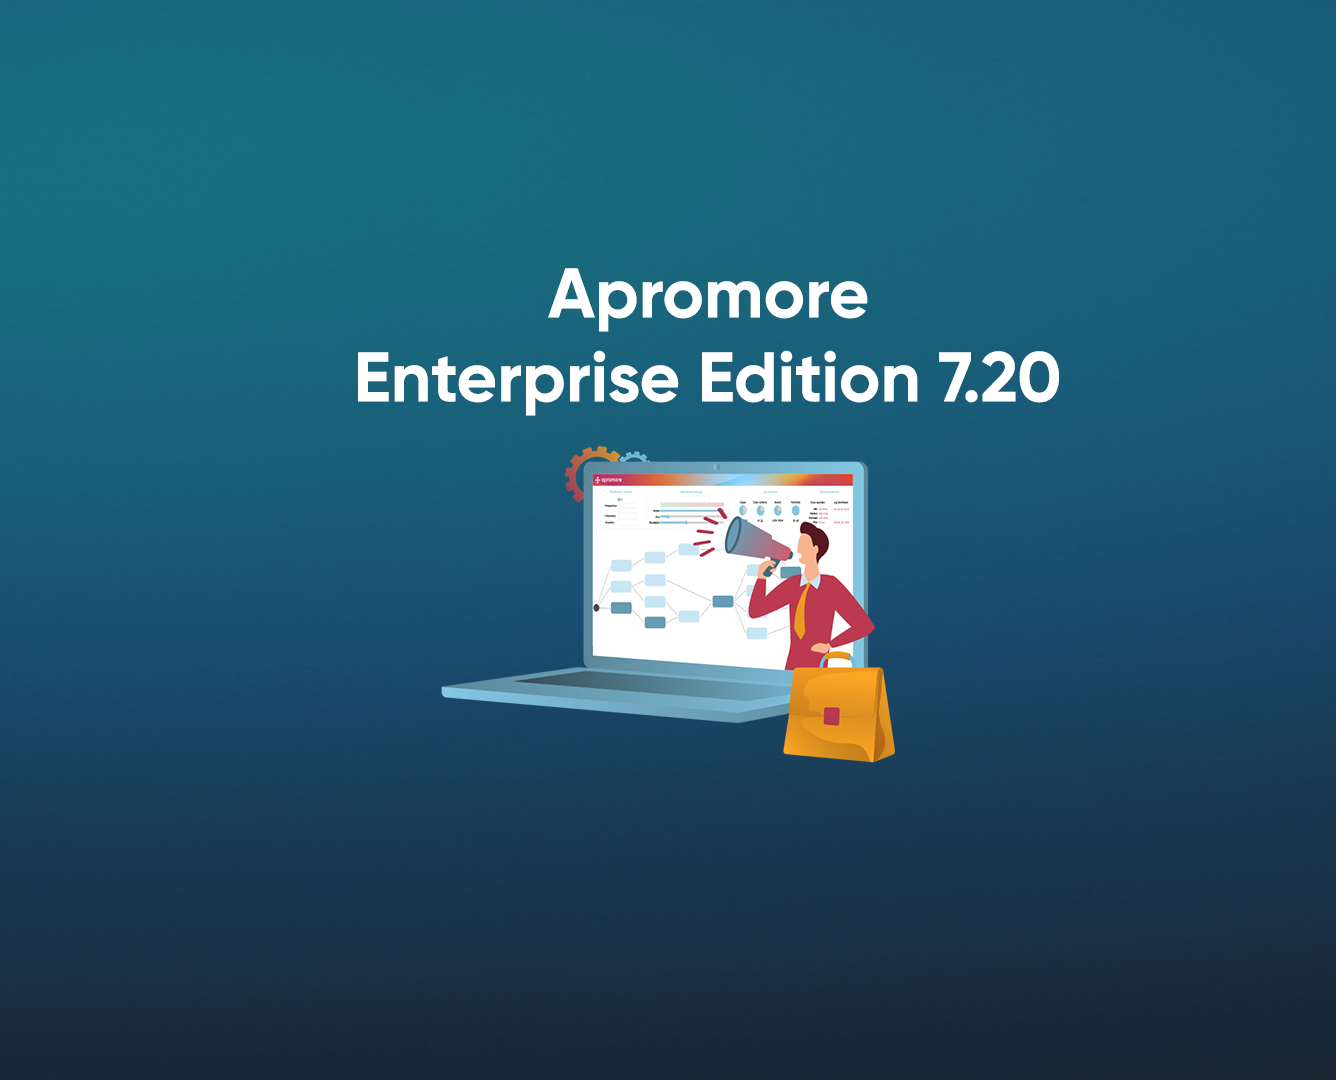 Apromore Enterprise Edition 7.20 has arrived!